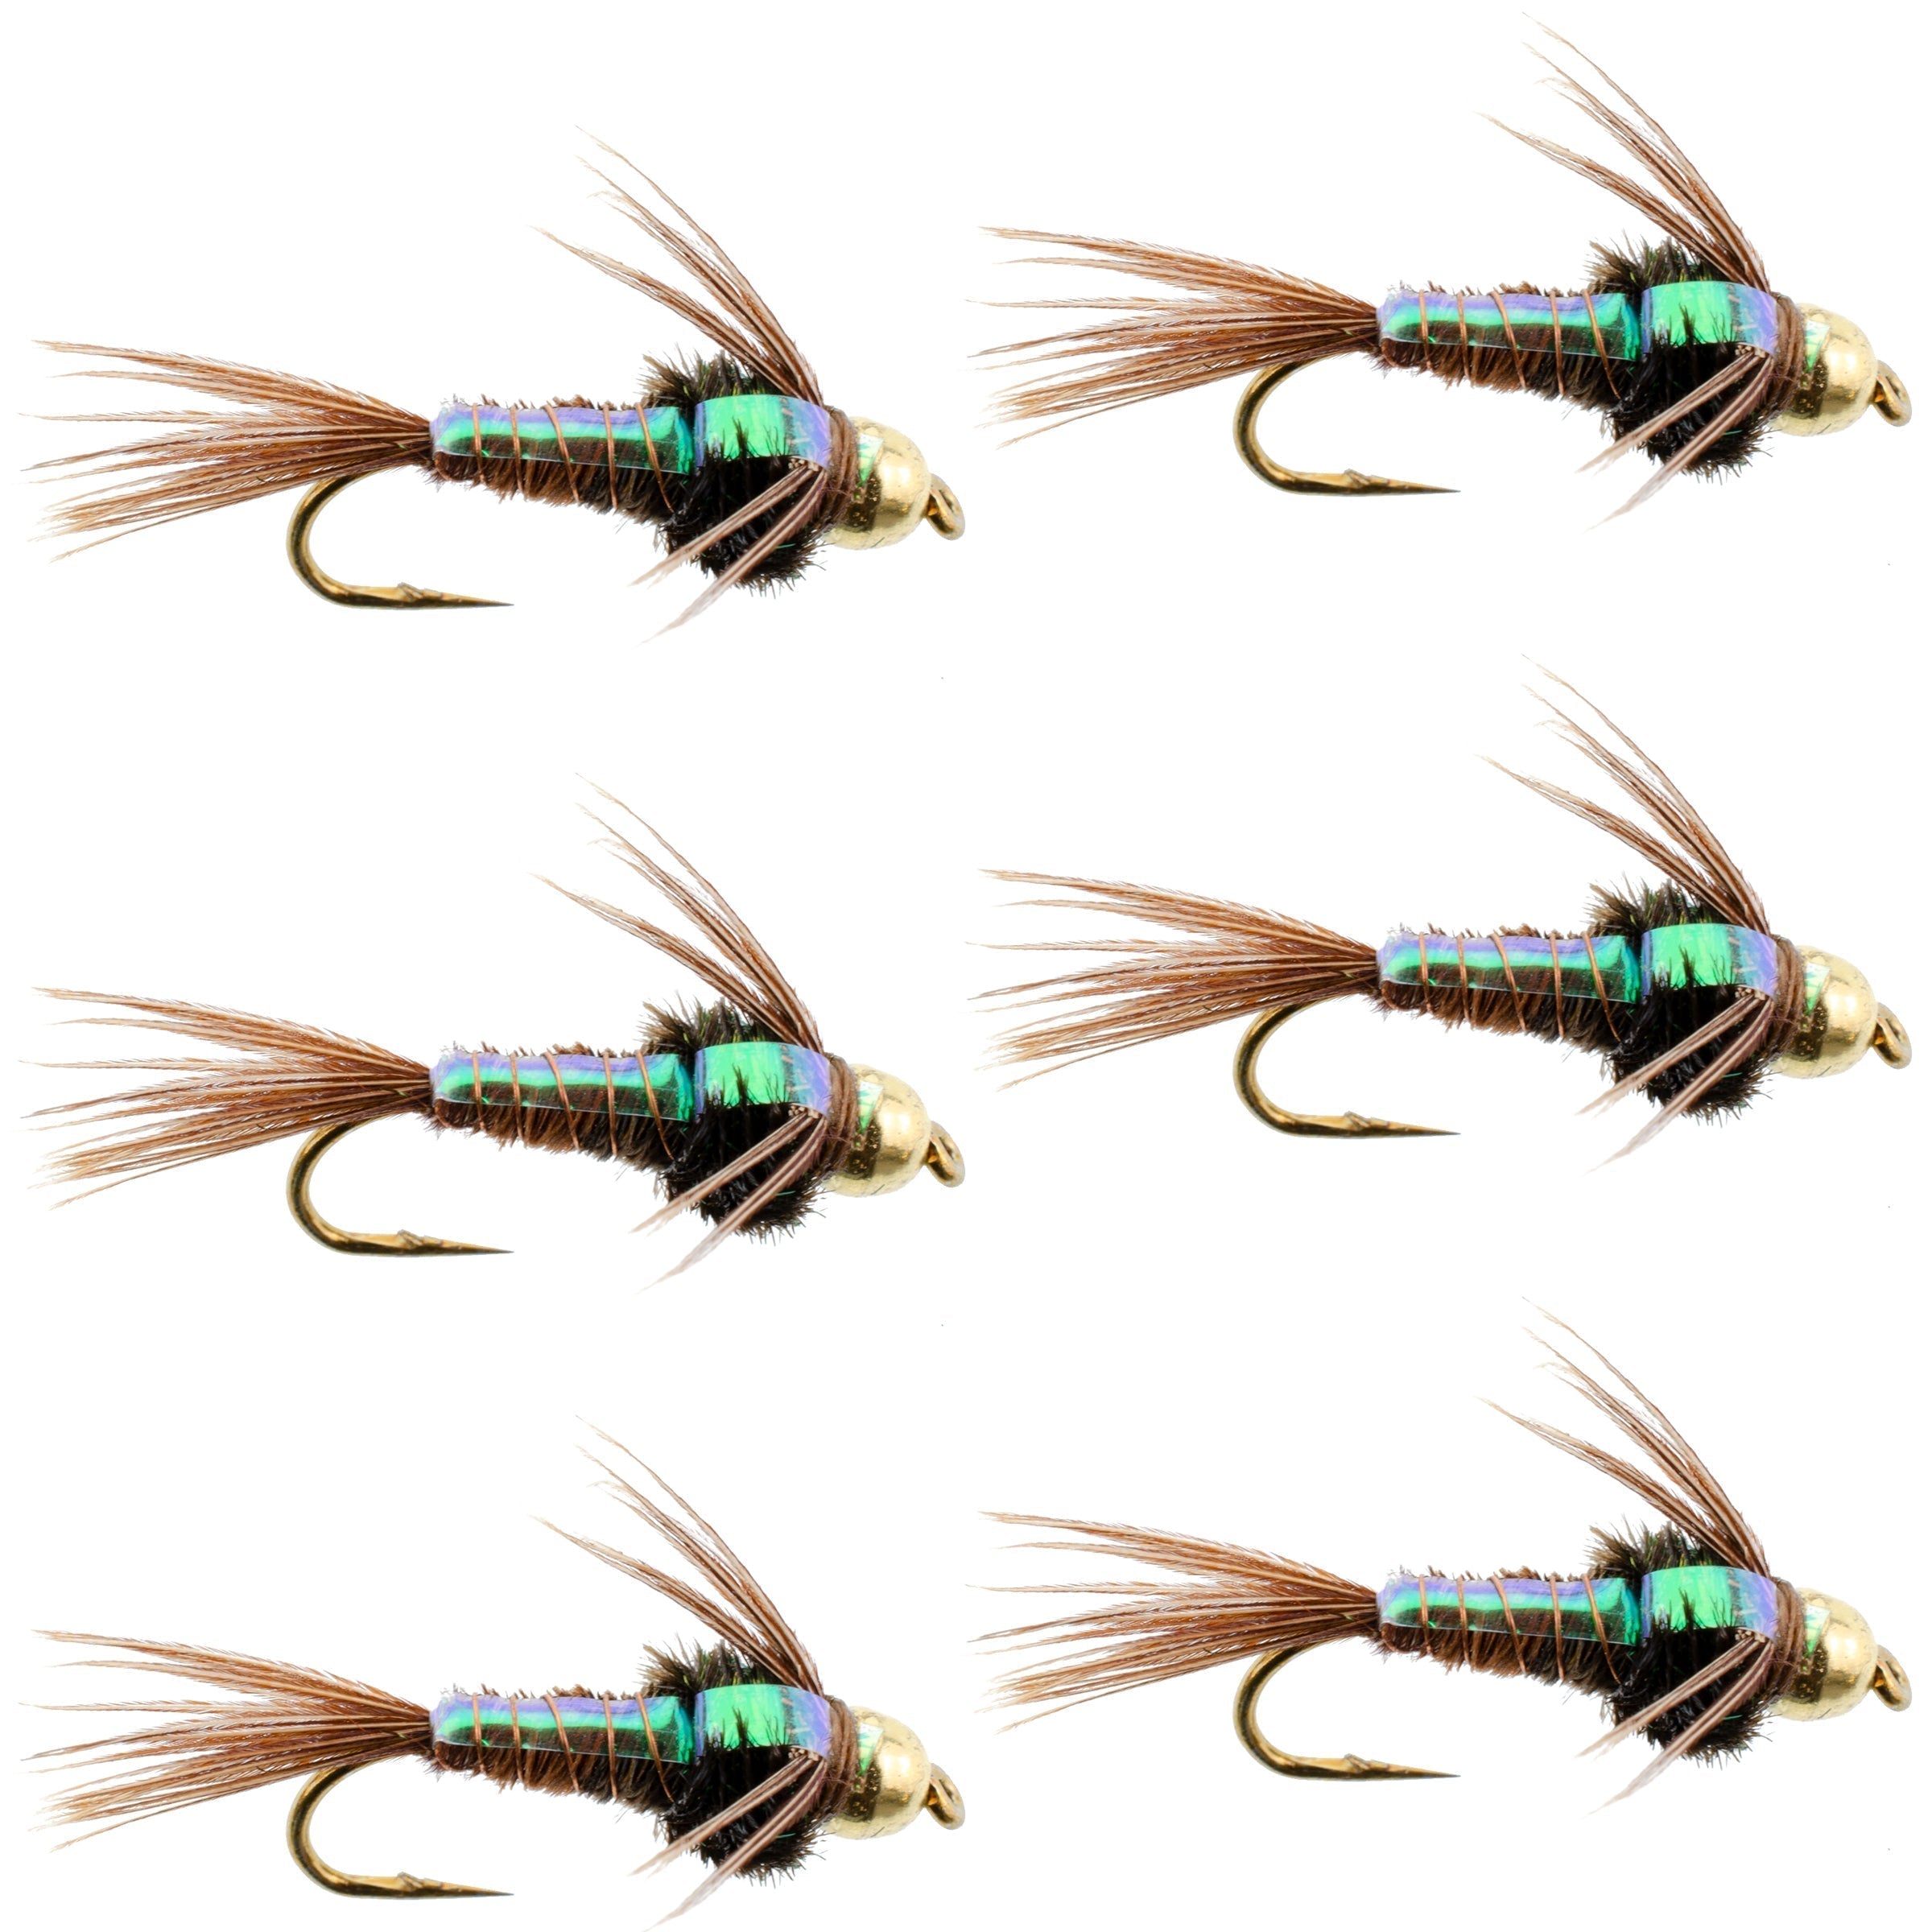 Bead Head Flash Back Pheasant Tail Nymph Fly Fishing Flies - 6 Flies Hook Size 18